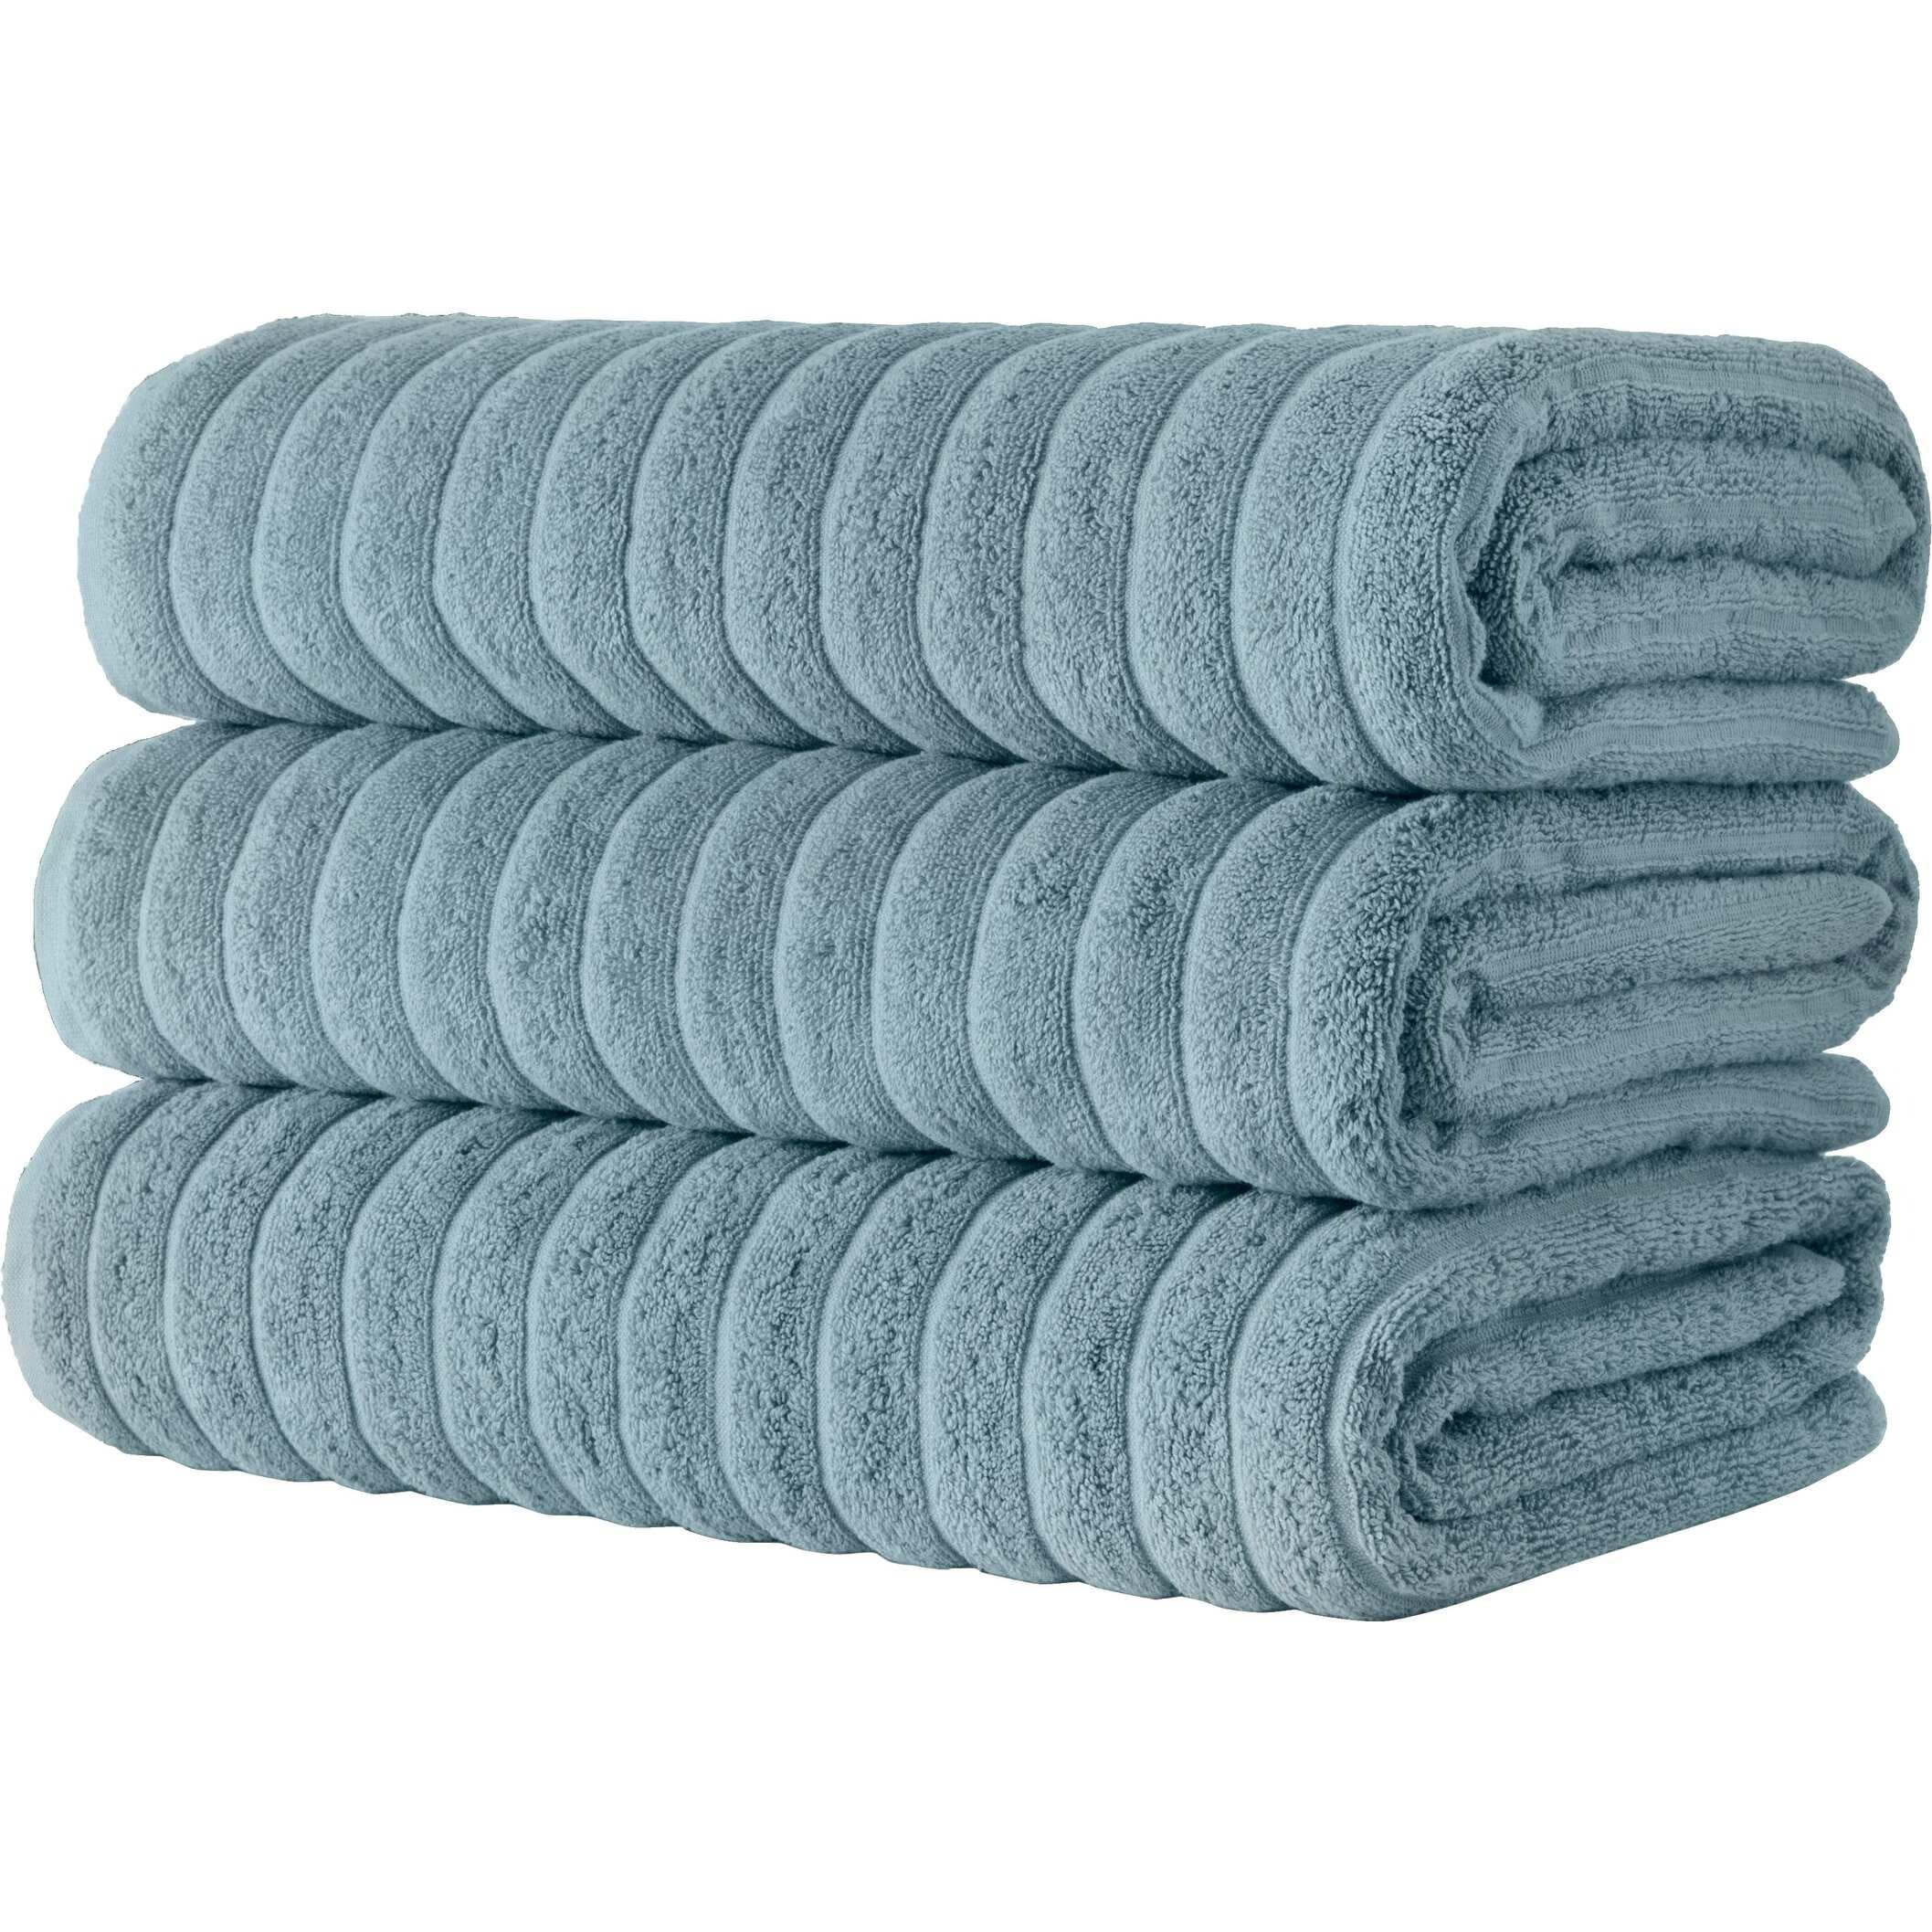 Bath sheet towels wholesale